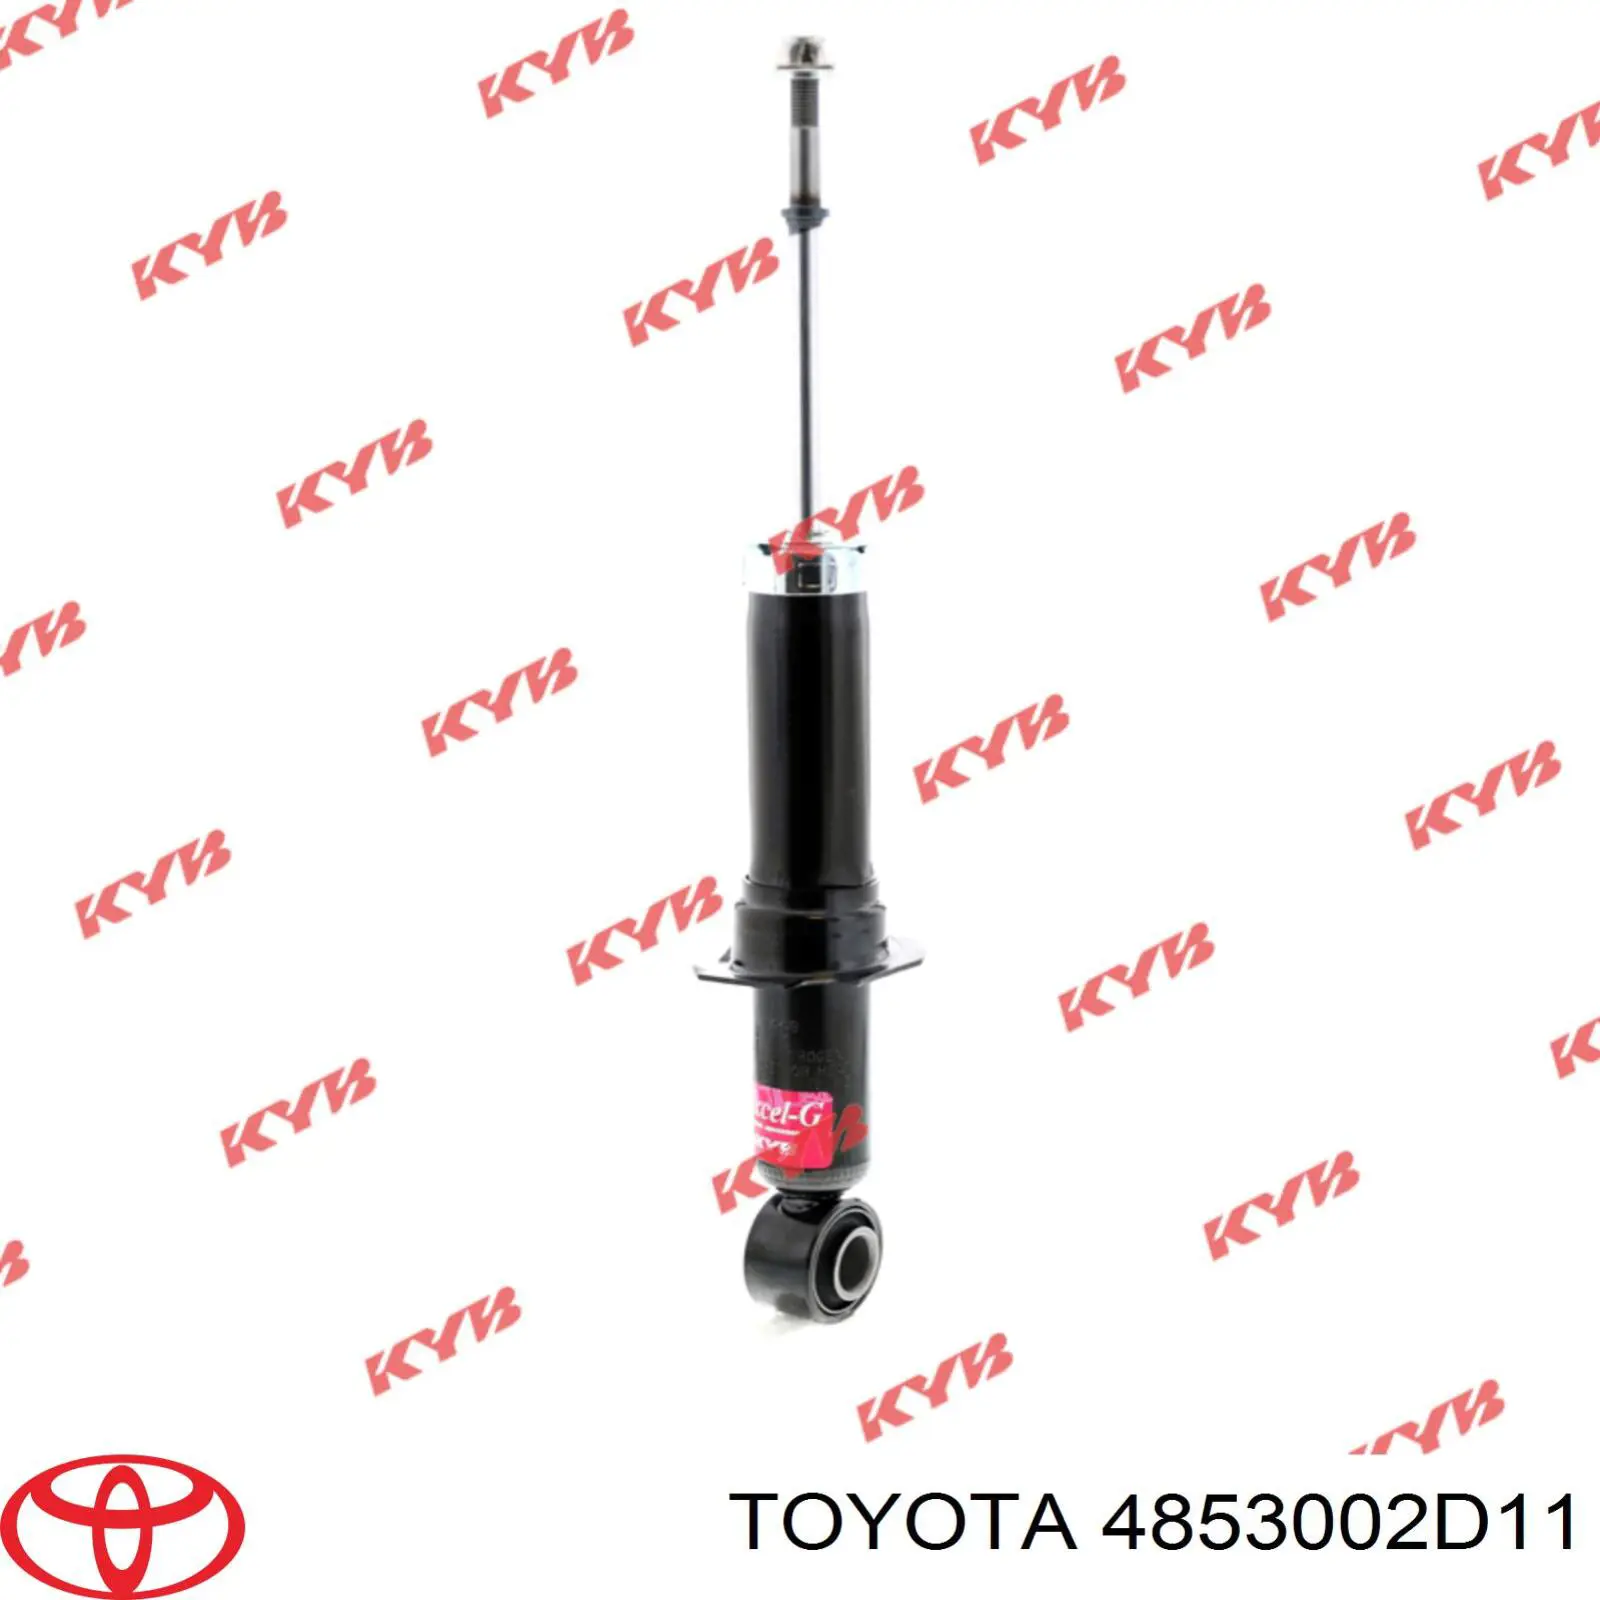 4853002D11 Toyota